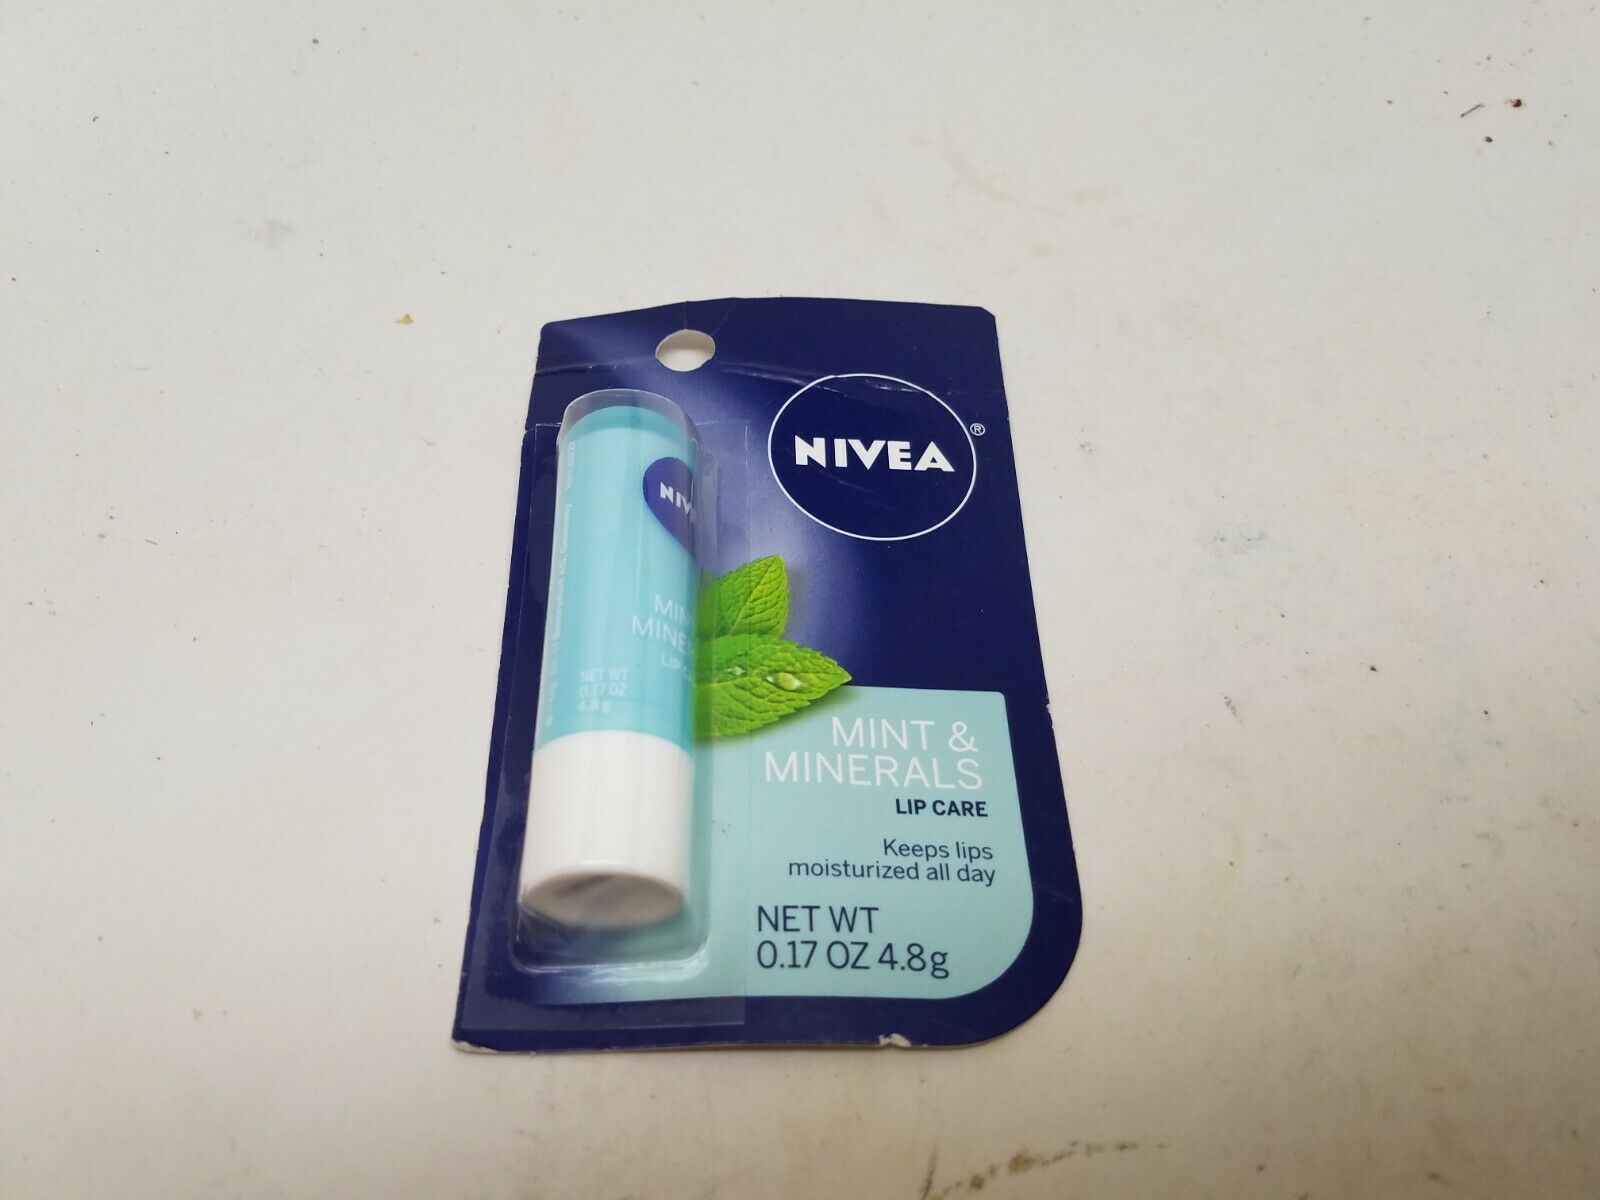 NIVEA Mint & Minerals Lip Care - 0.17 oz DENTED PACKAGING